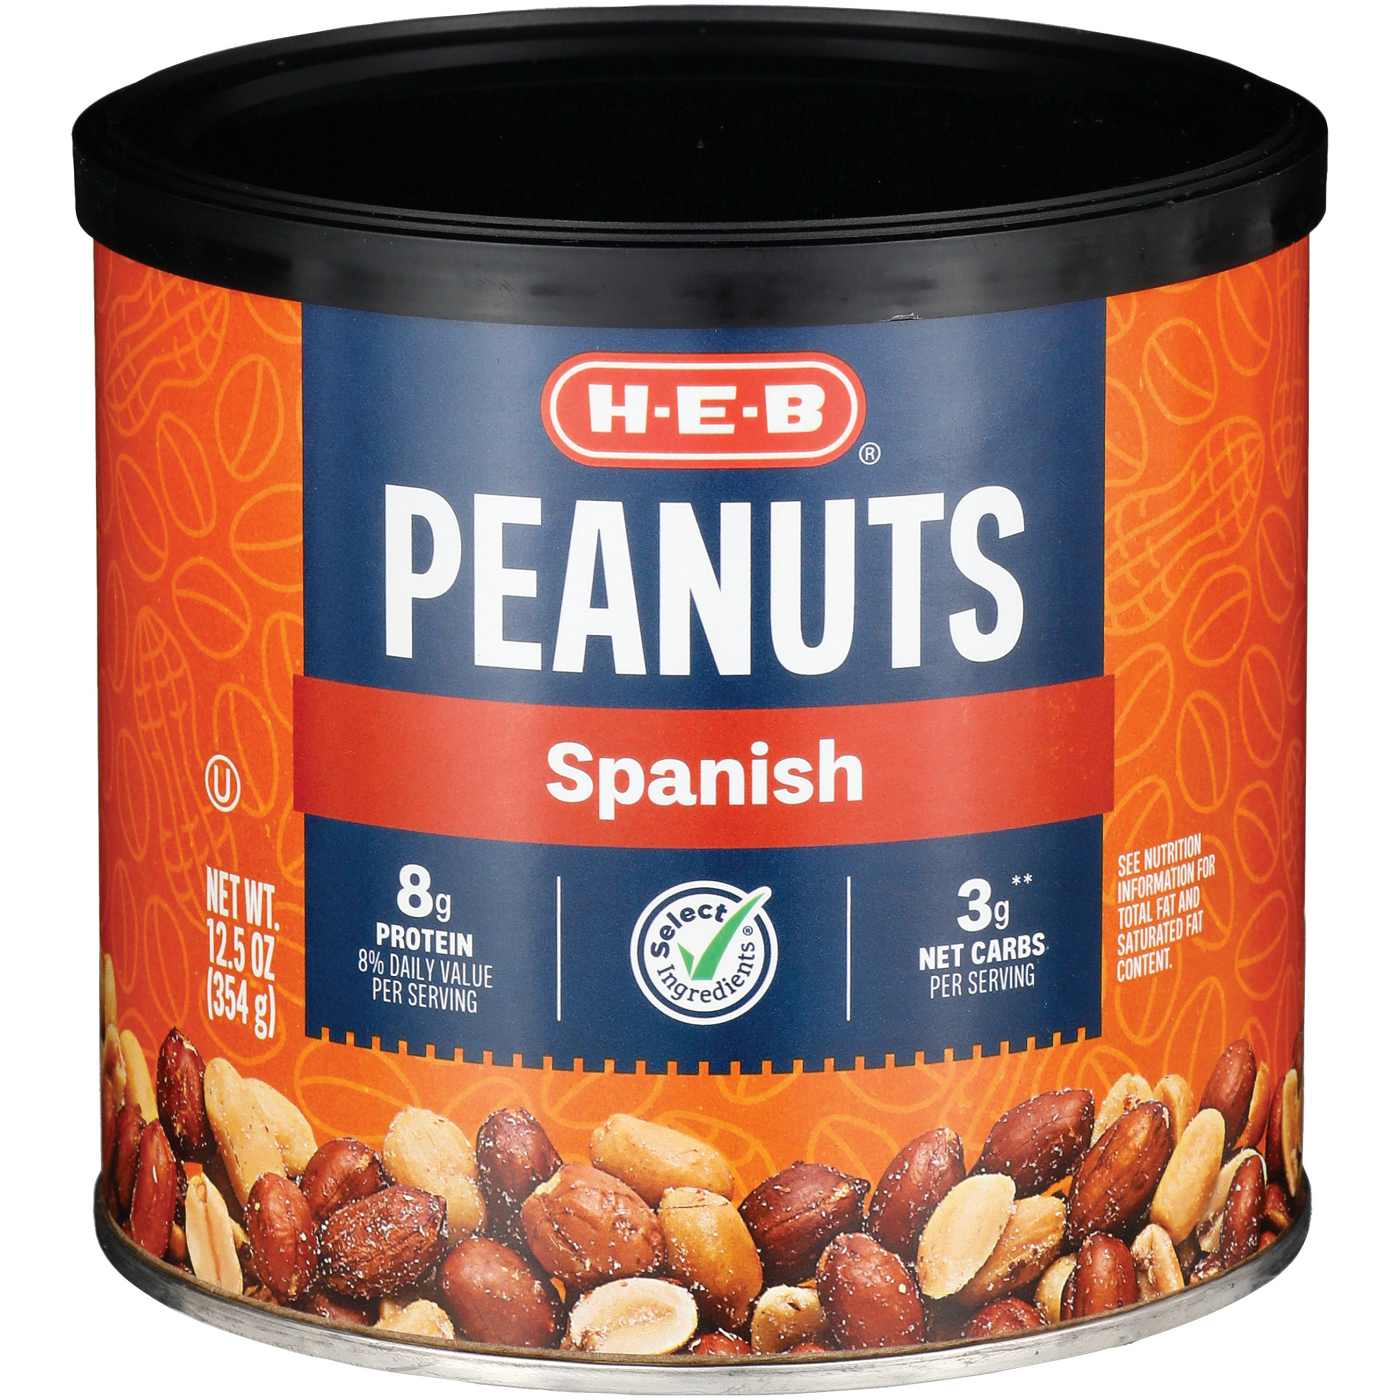 H-E-B Spanish Peanuts; image 1 of 2